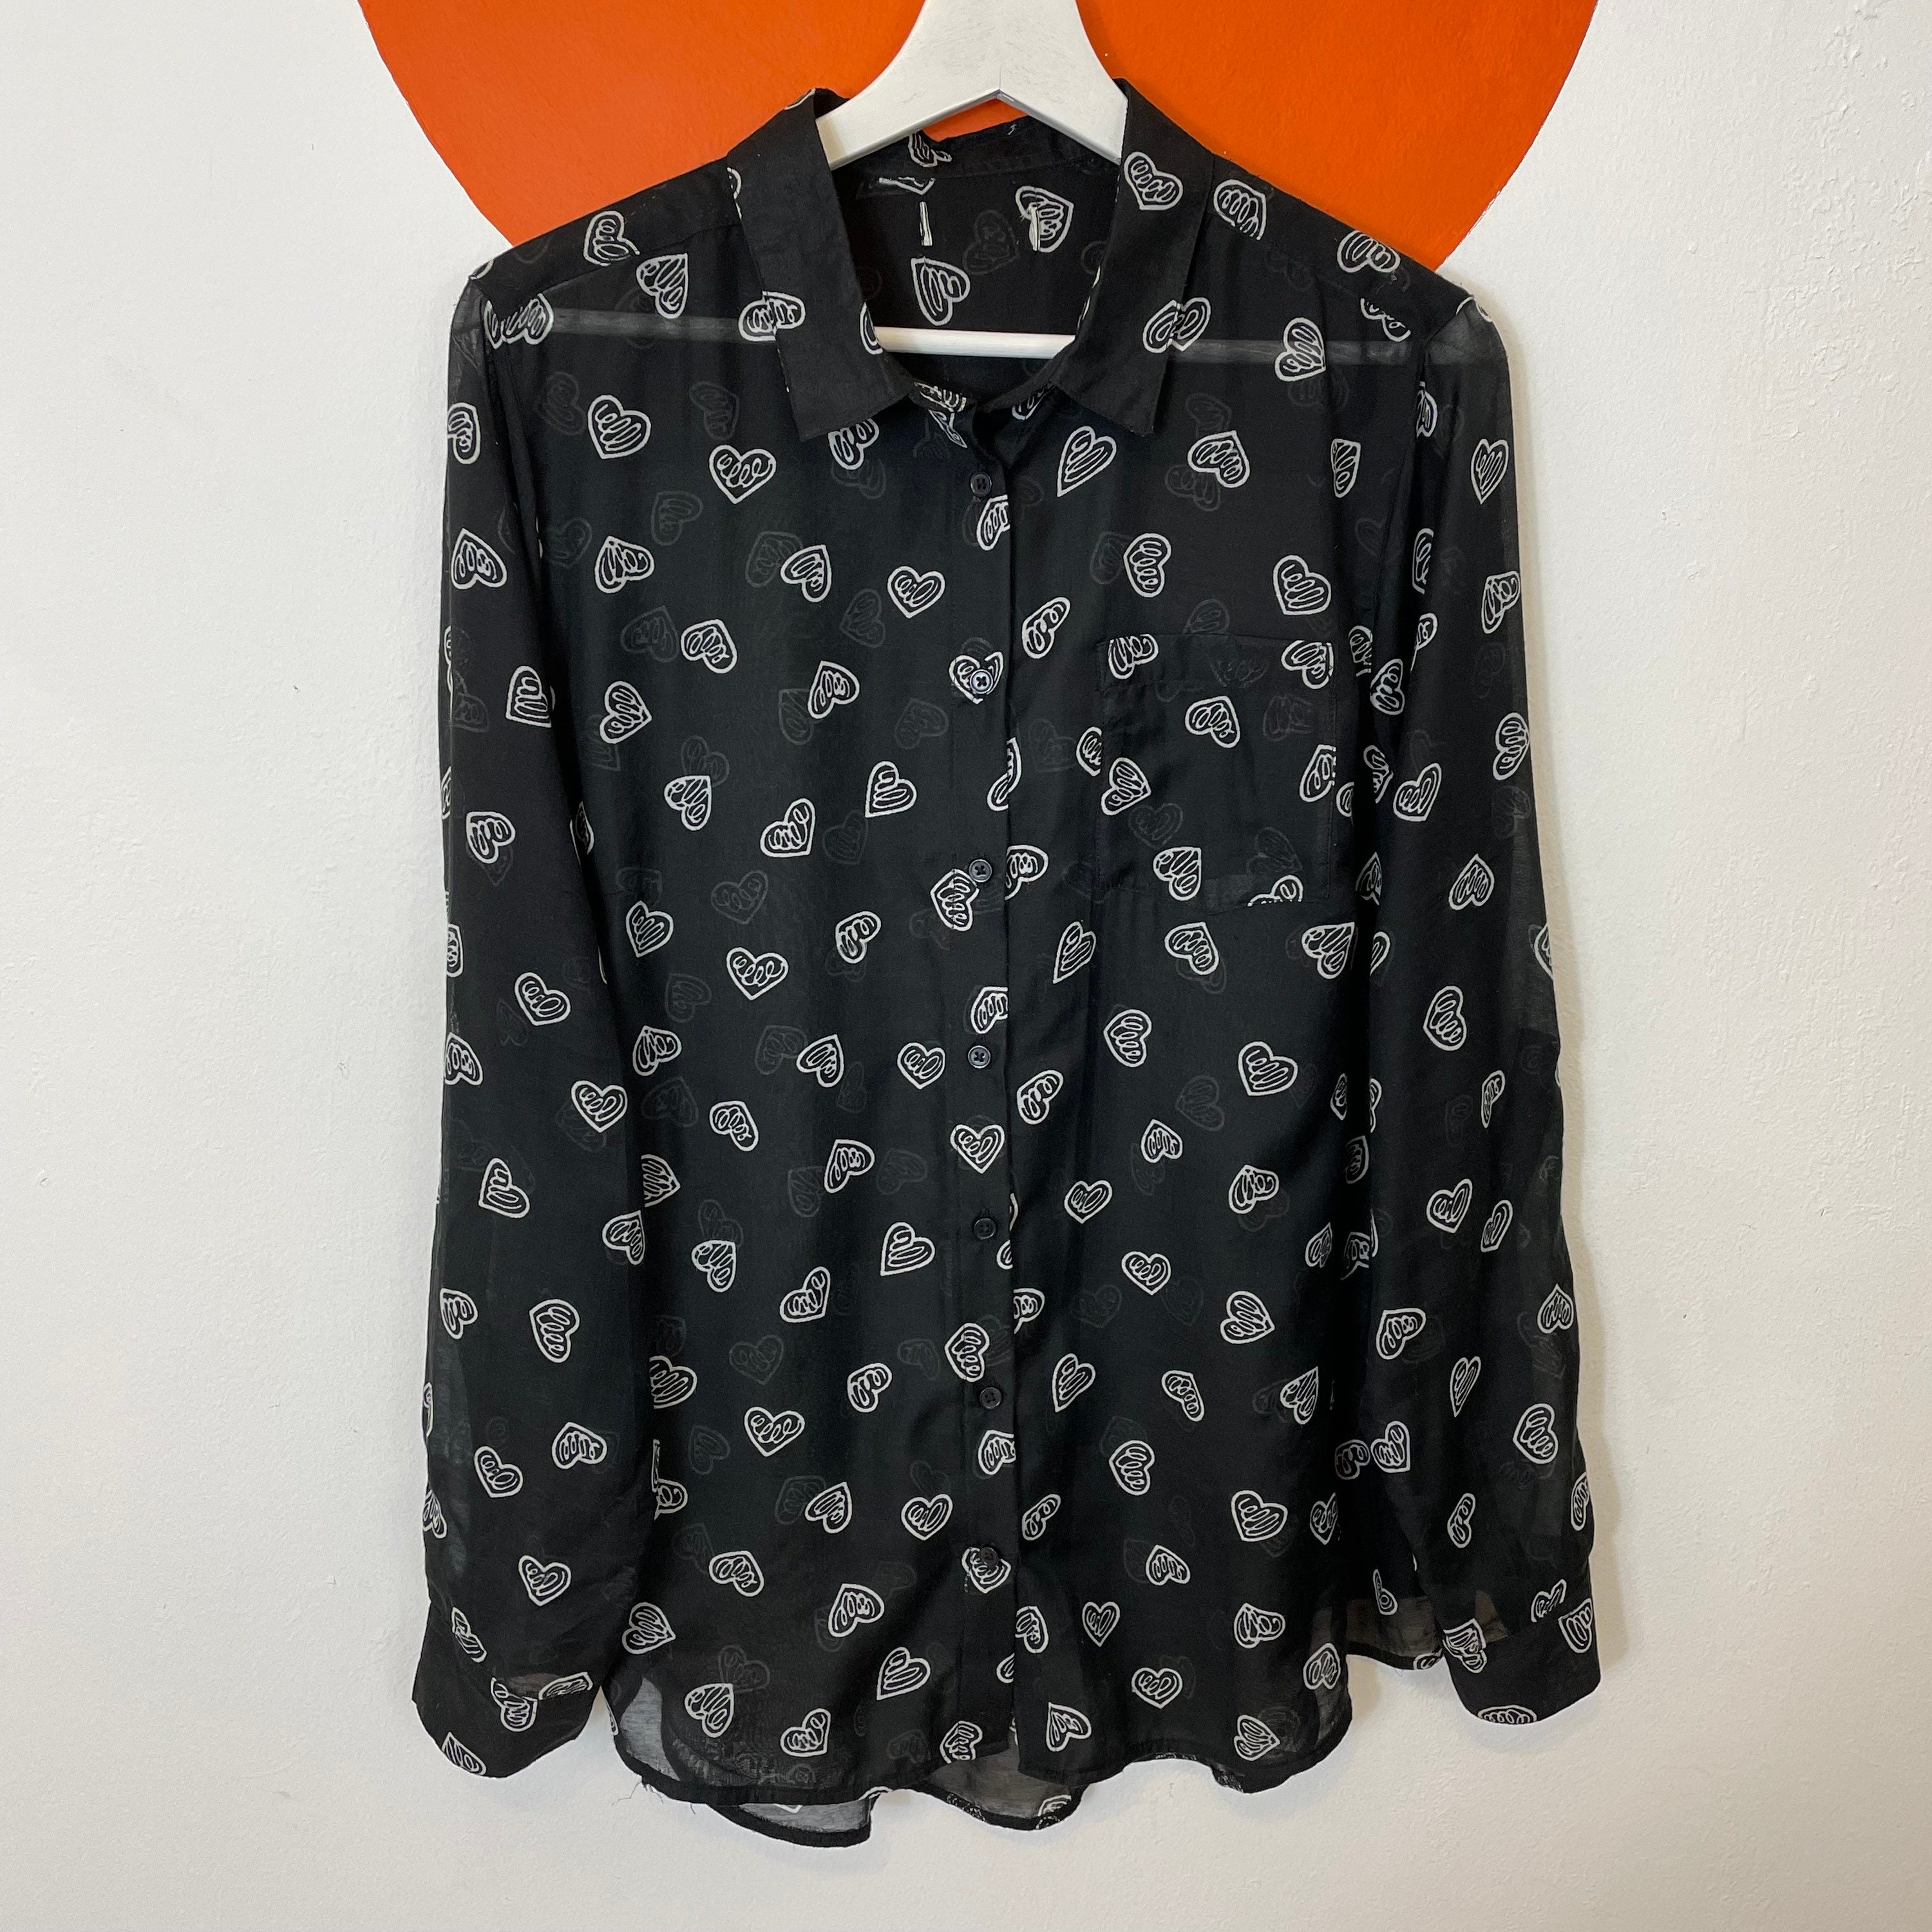 Black Heart Print Long Sleeve Blouse Shirt Top Graphic Funky | Etsy